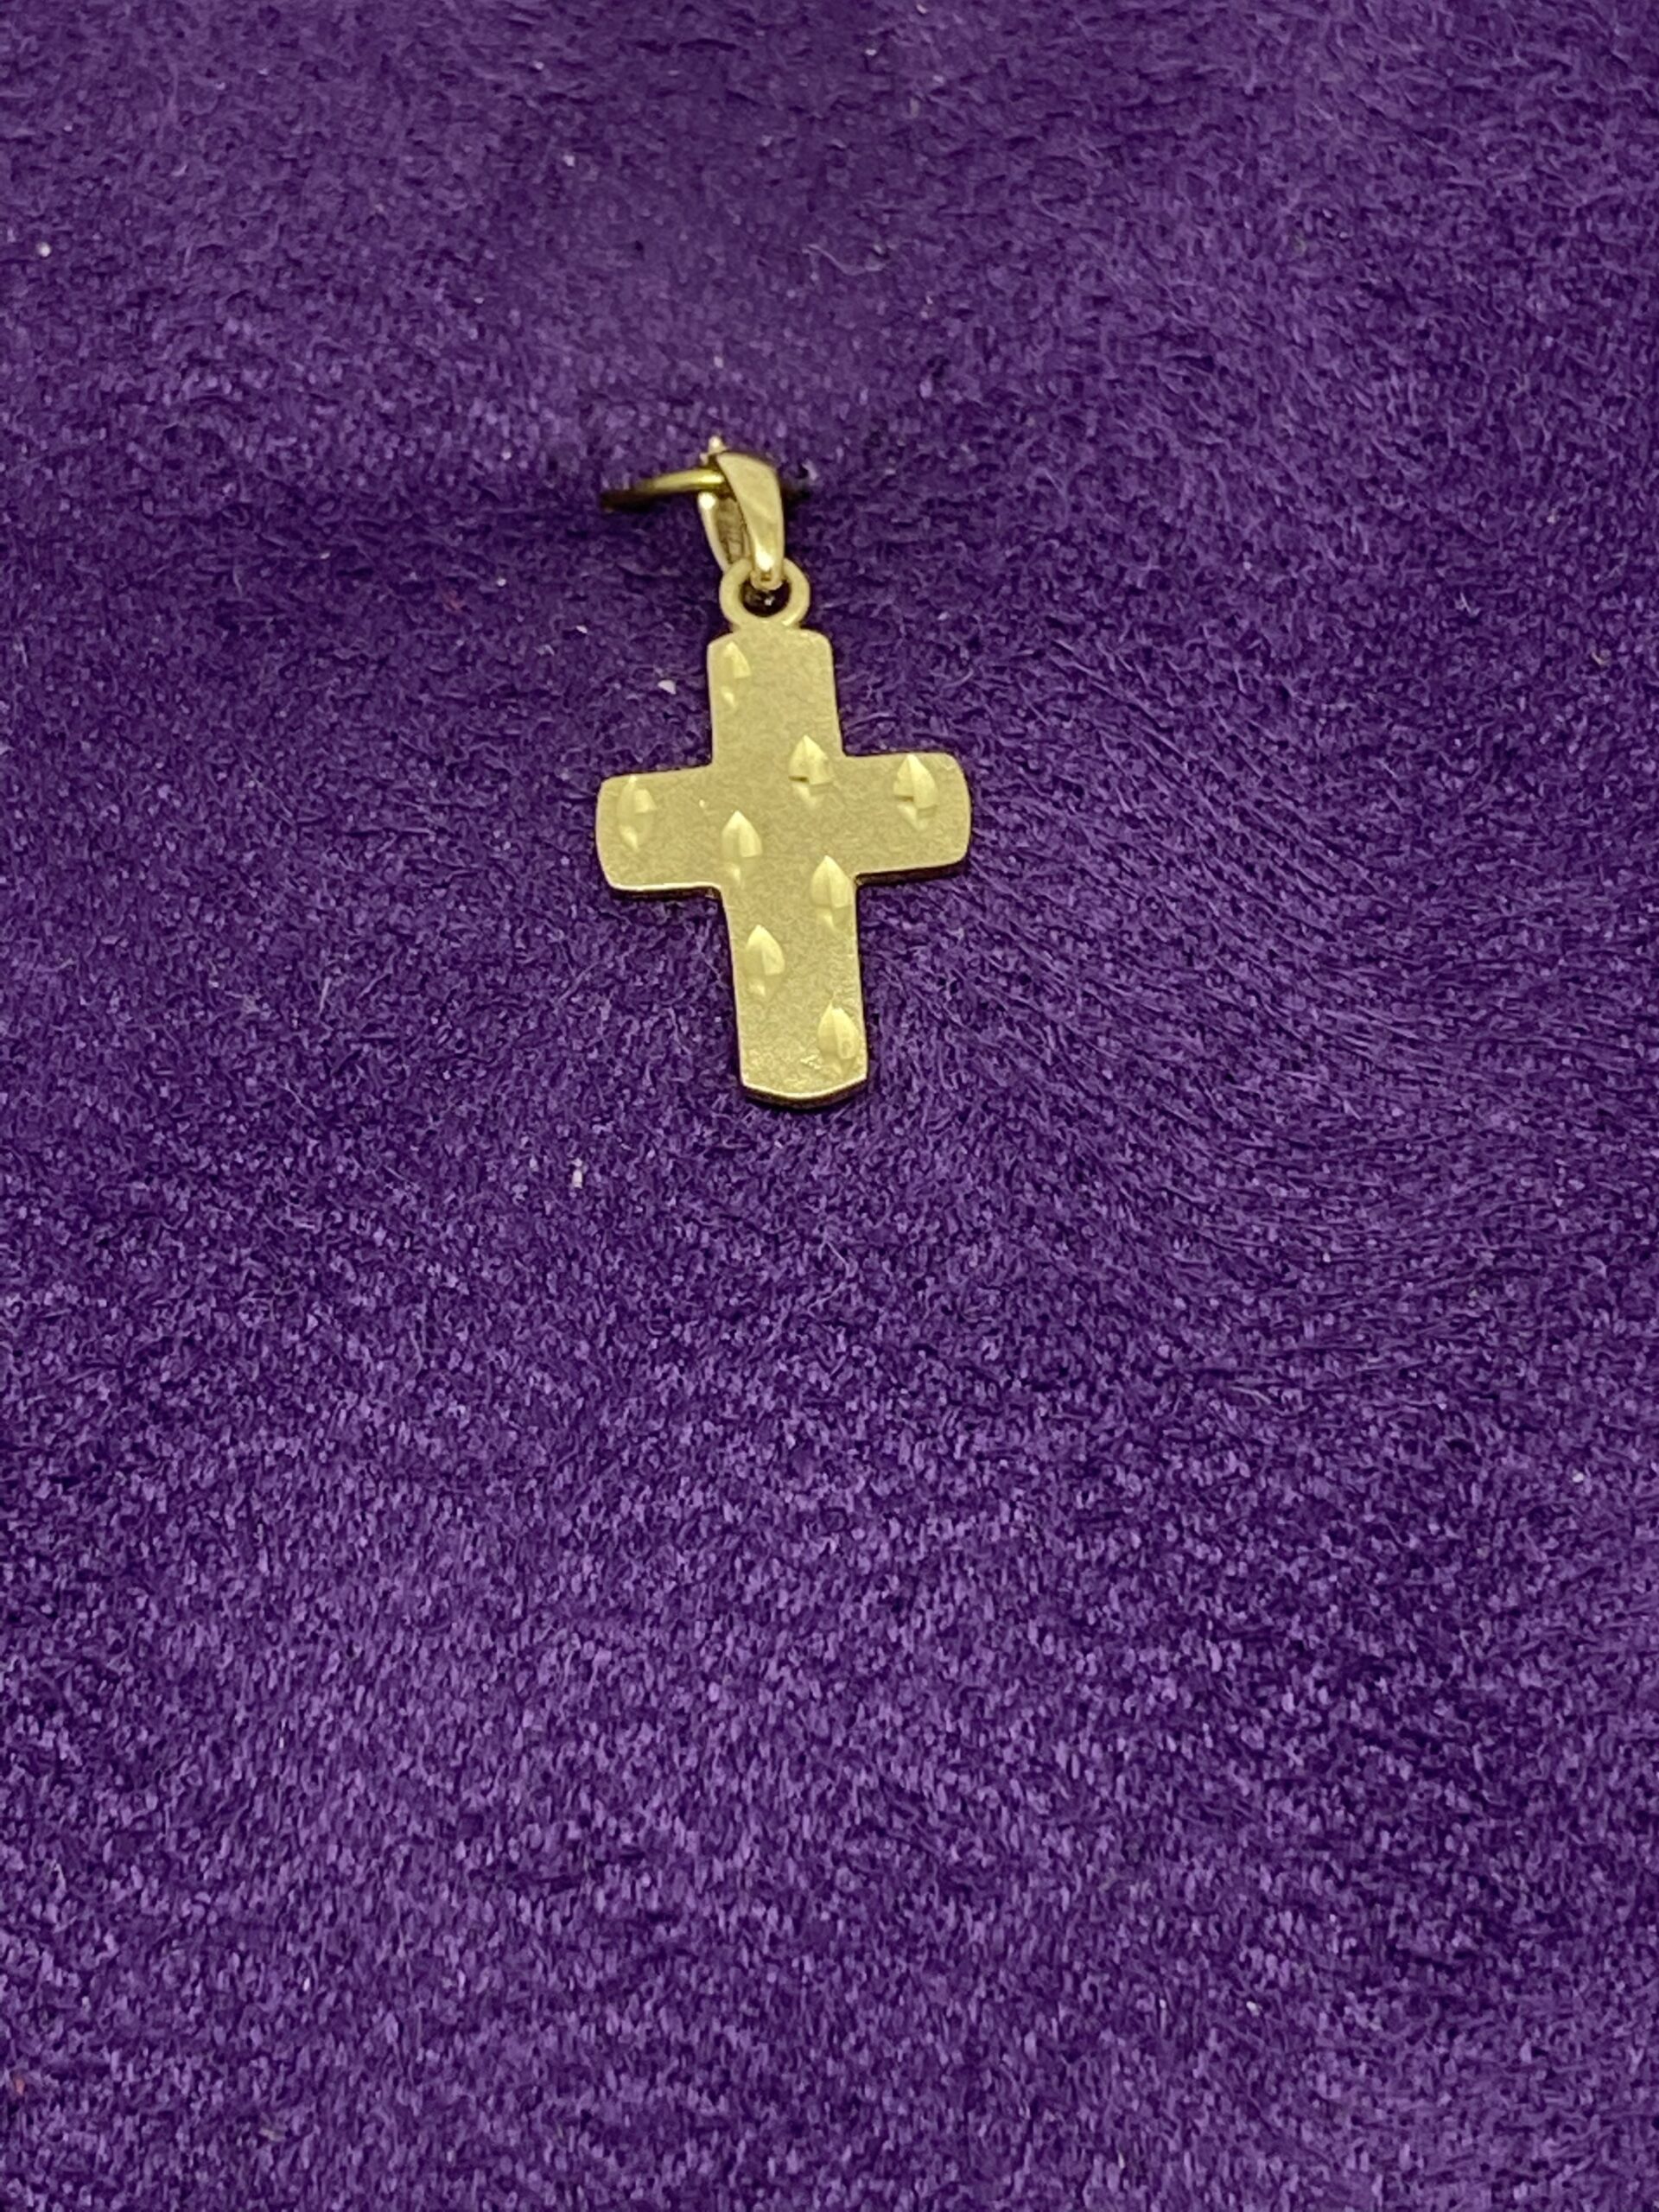 Ladies small Gold Cross Pendant - By Design Jewellers Killarney Mall